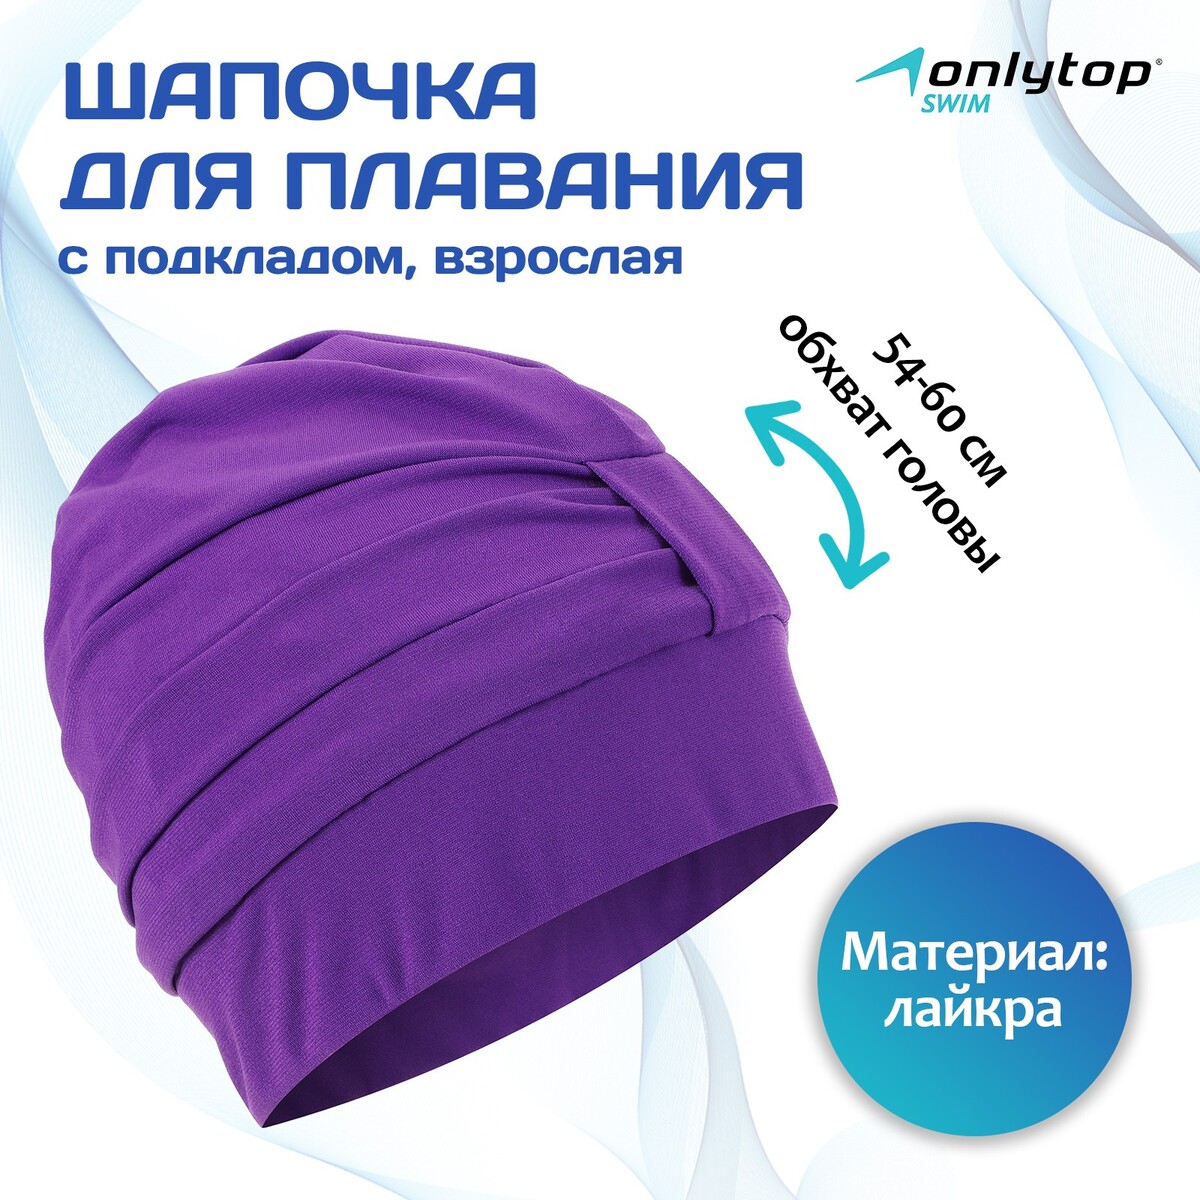 Шапочка для плавания взрослая onlytop, тканевая, обхват 54-60 см, цвет фиолетовый термобутылка onlytop 500 мл фиолетовый